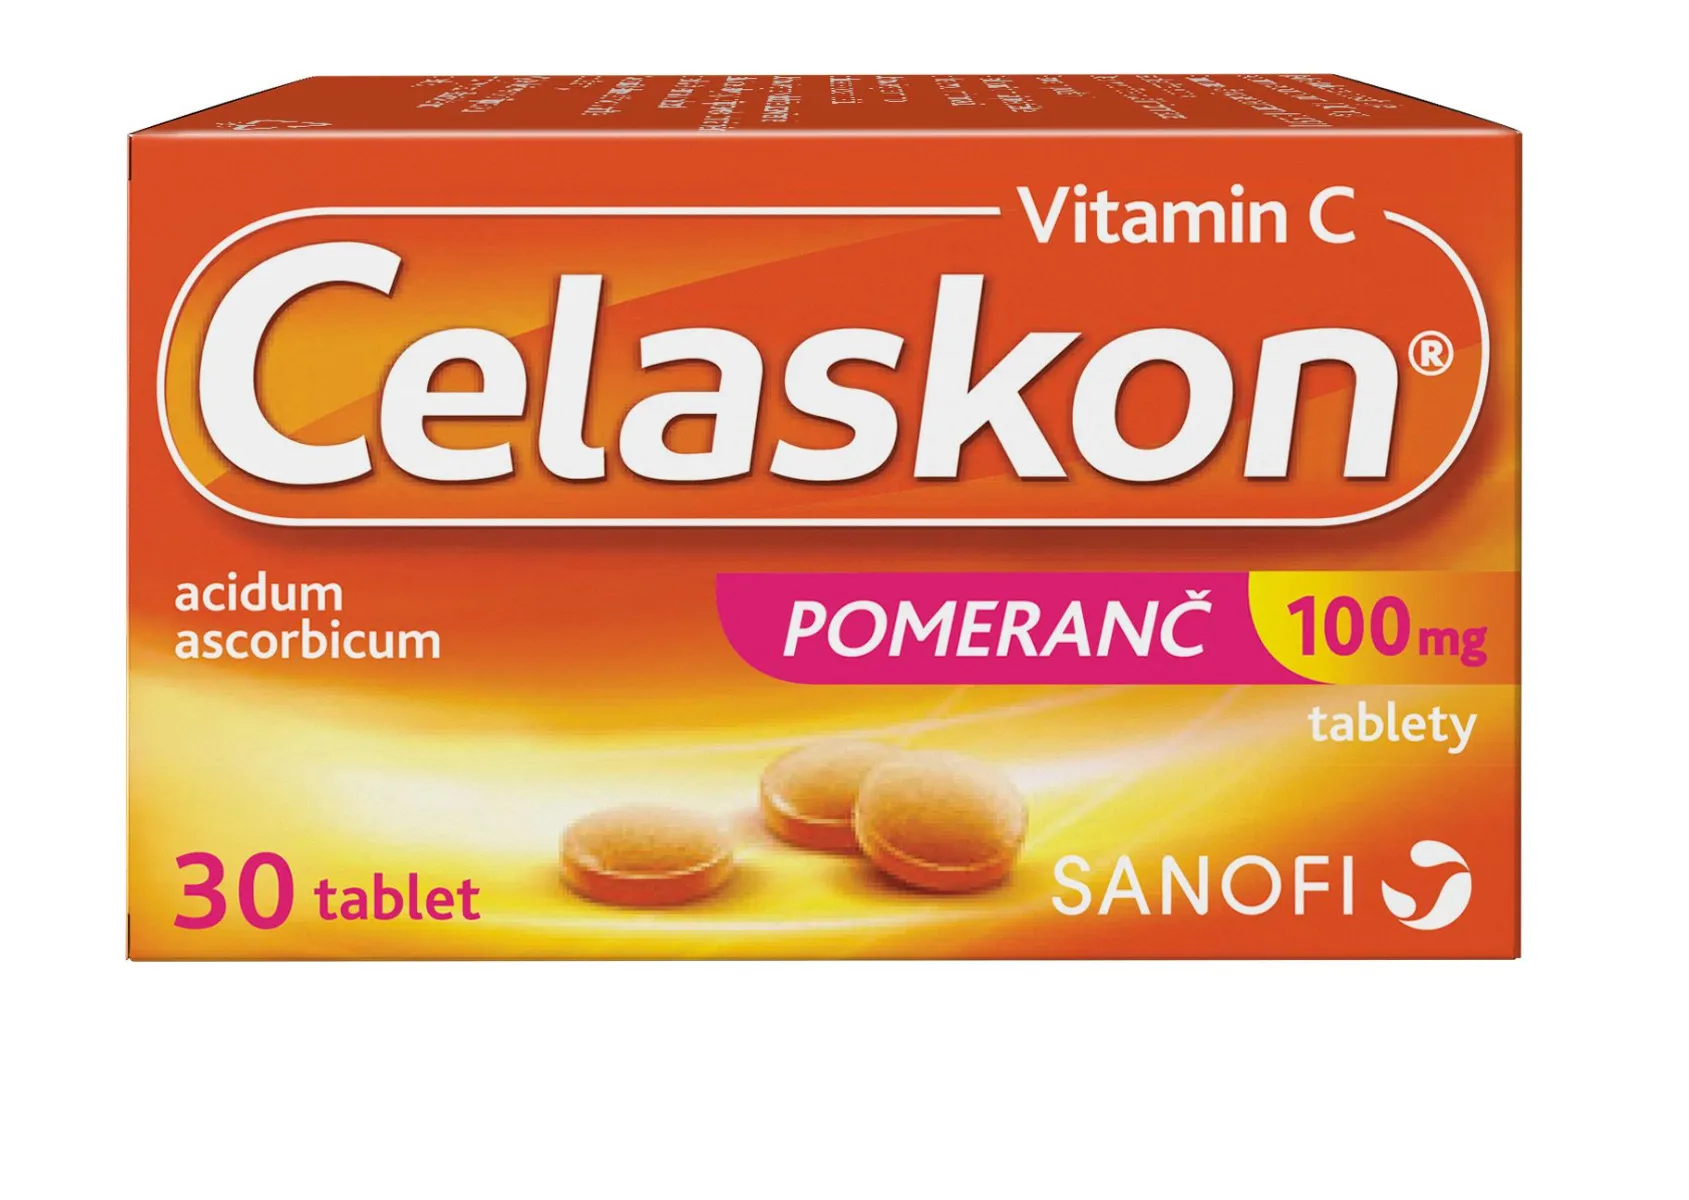 Celaskon Pomeranč 100 mg